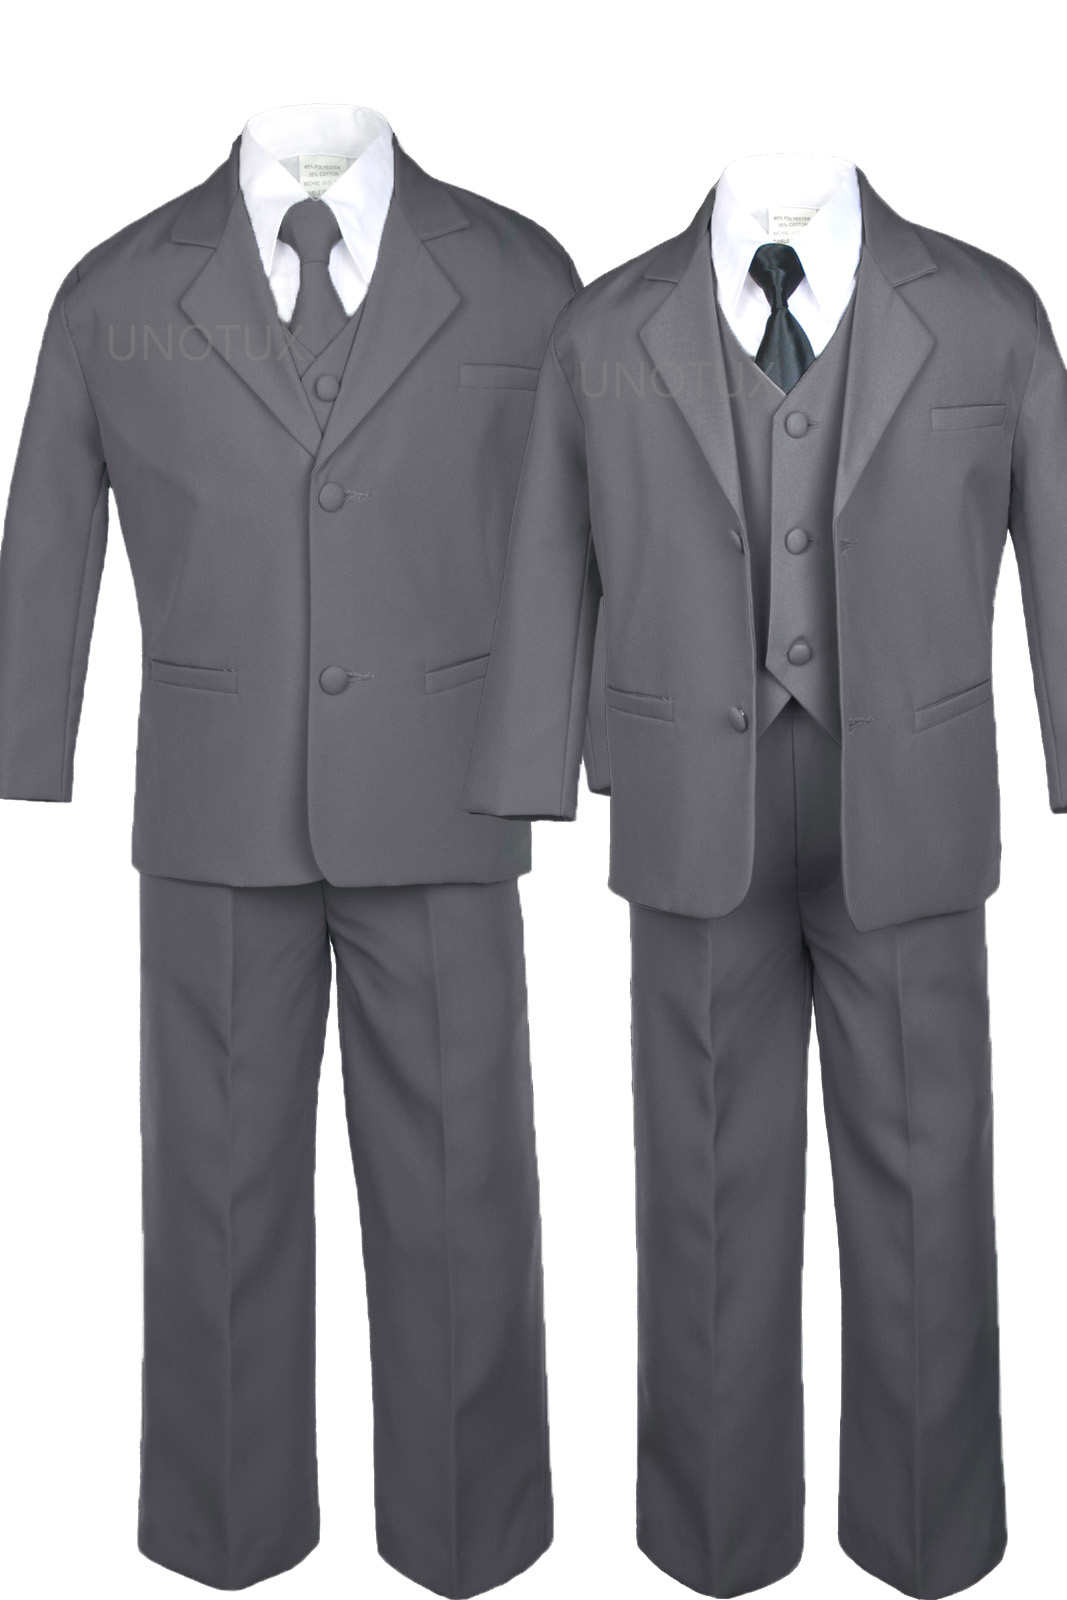 6pc 5 6 7 8 10 12 14 16 18 20 Kid Teen Boys Dark Grey Suit Tuxedo Formal Wedding Outfit Extra Satin Black Necktie Set